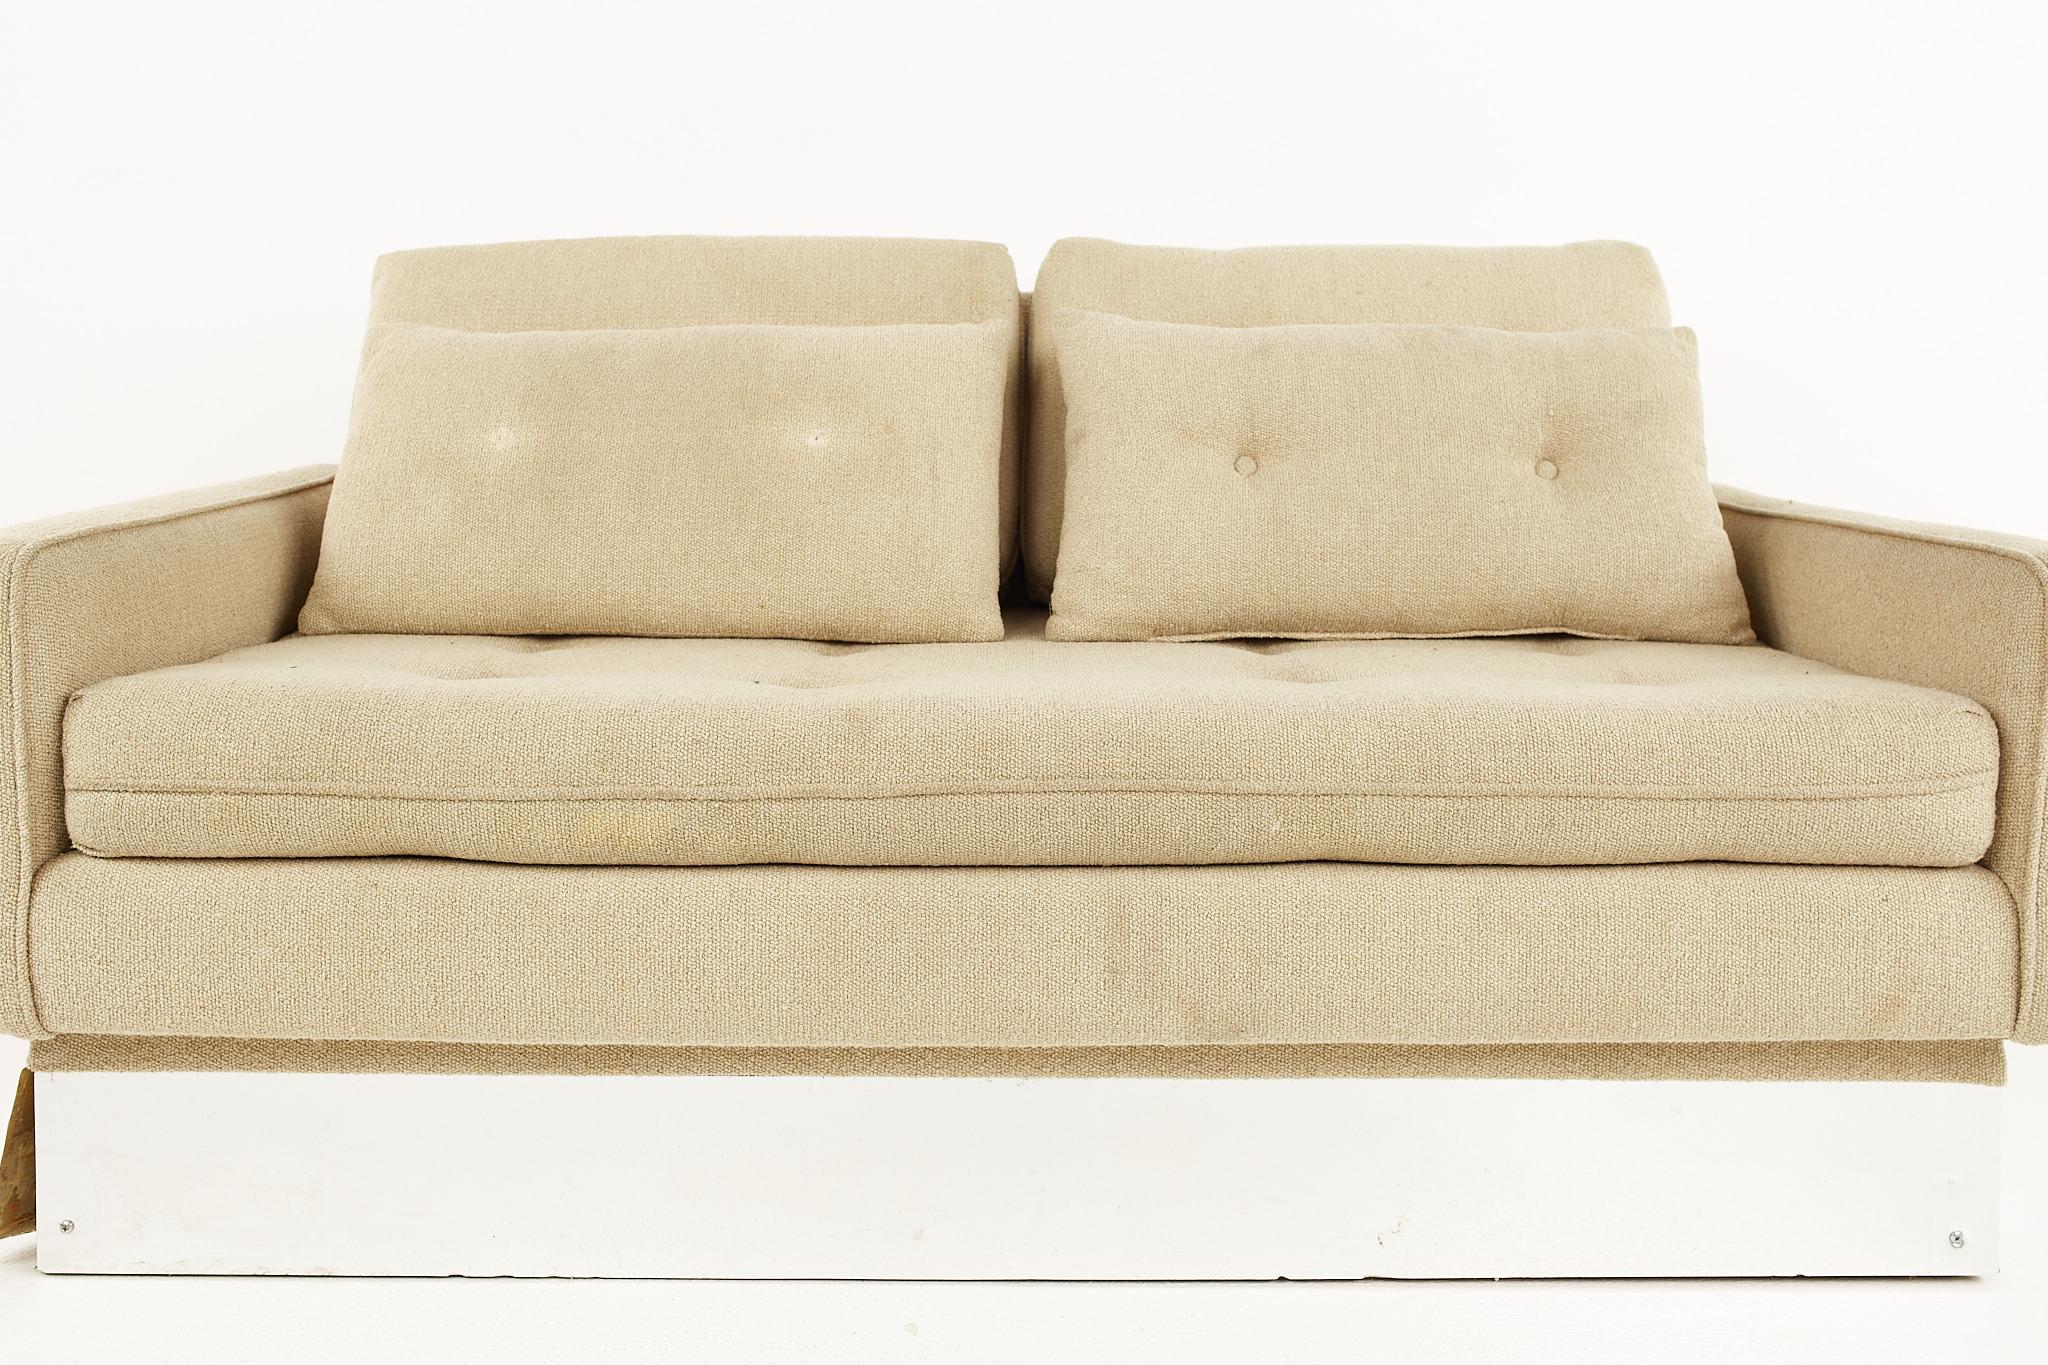 Upholstery Milo Baughman Style Mid Century Chrome Base Settee Sofa For Sale